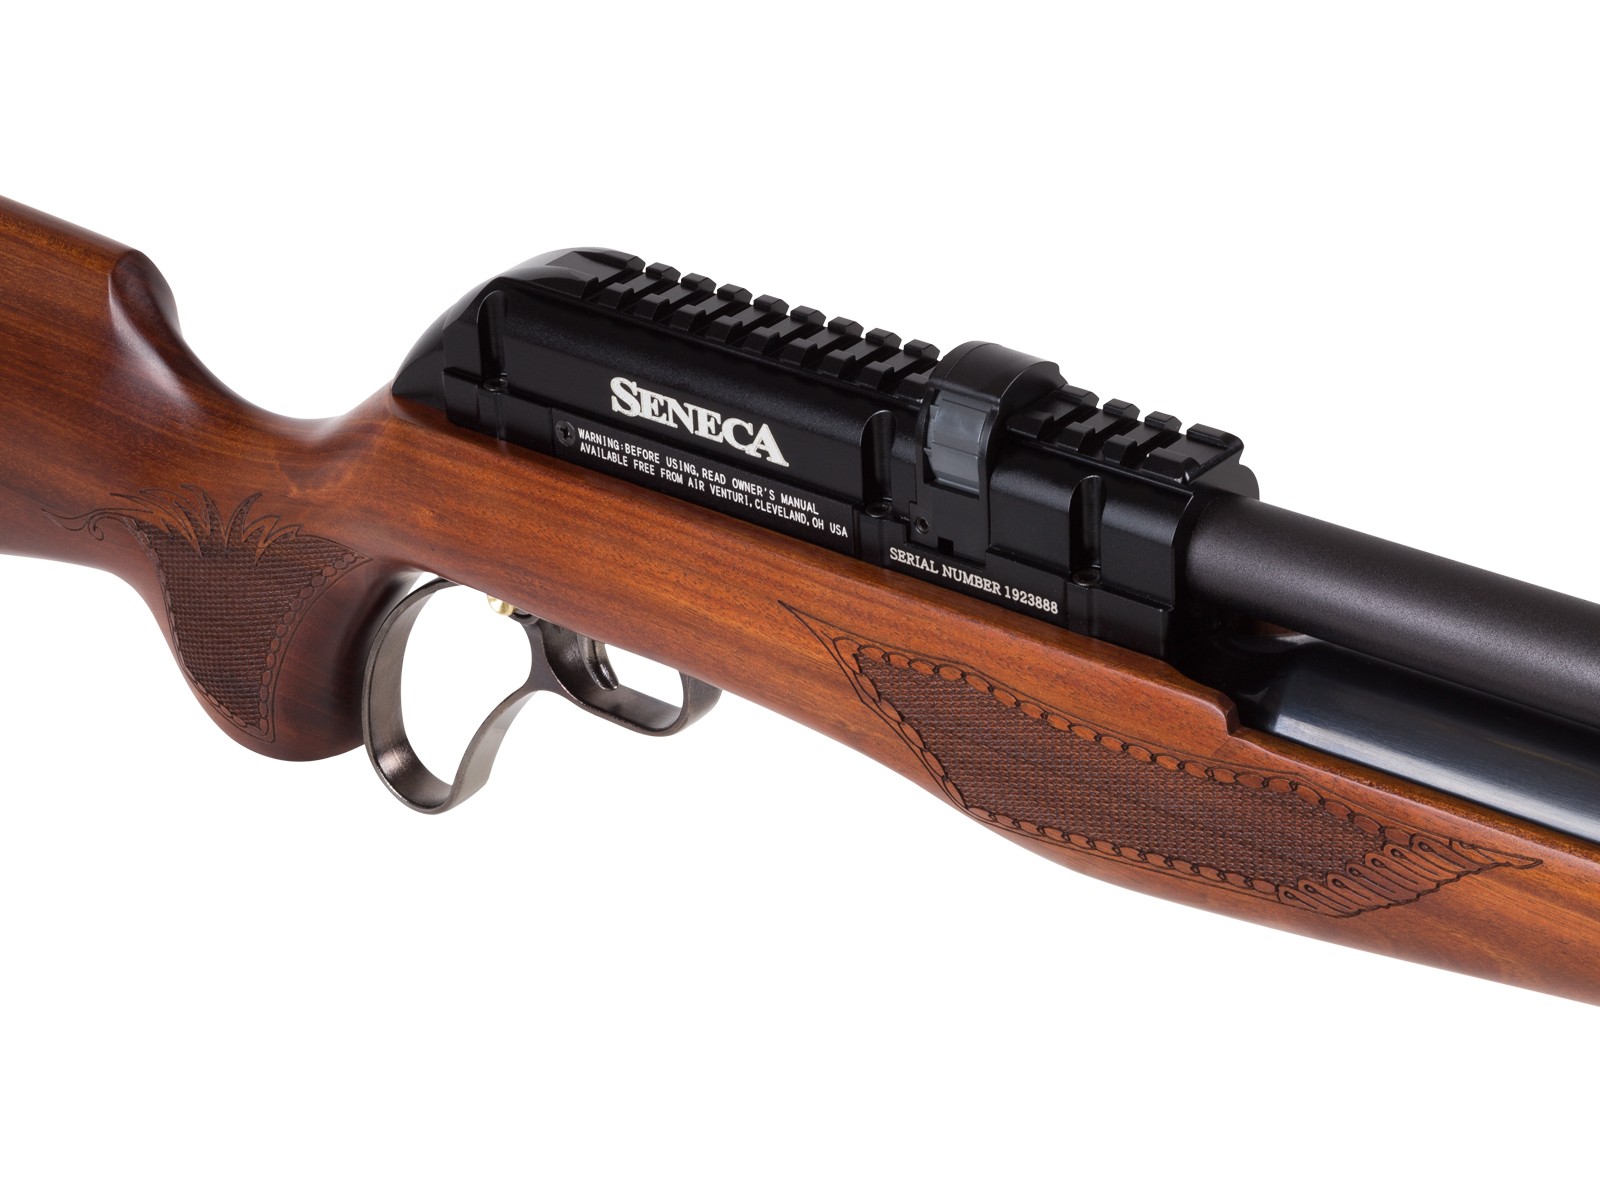 SENECA (Air Venturi) PCP Rifle Eagle Claw Carbine